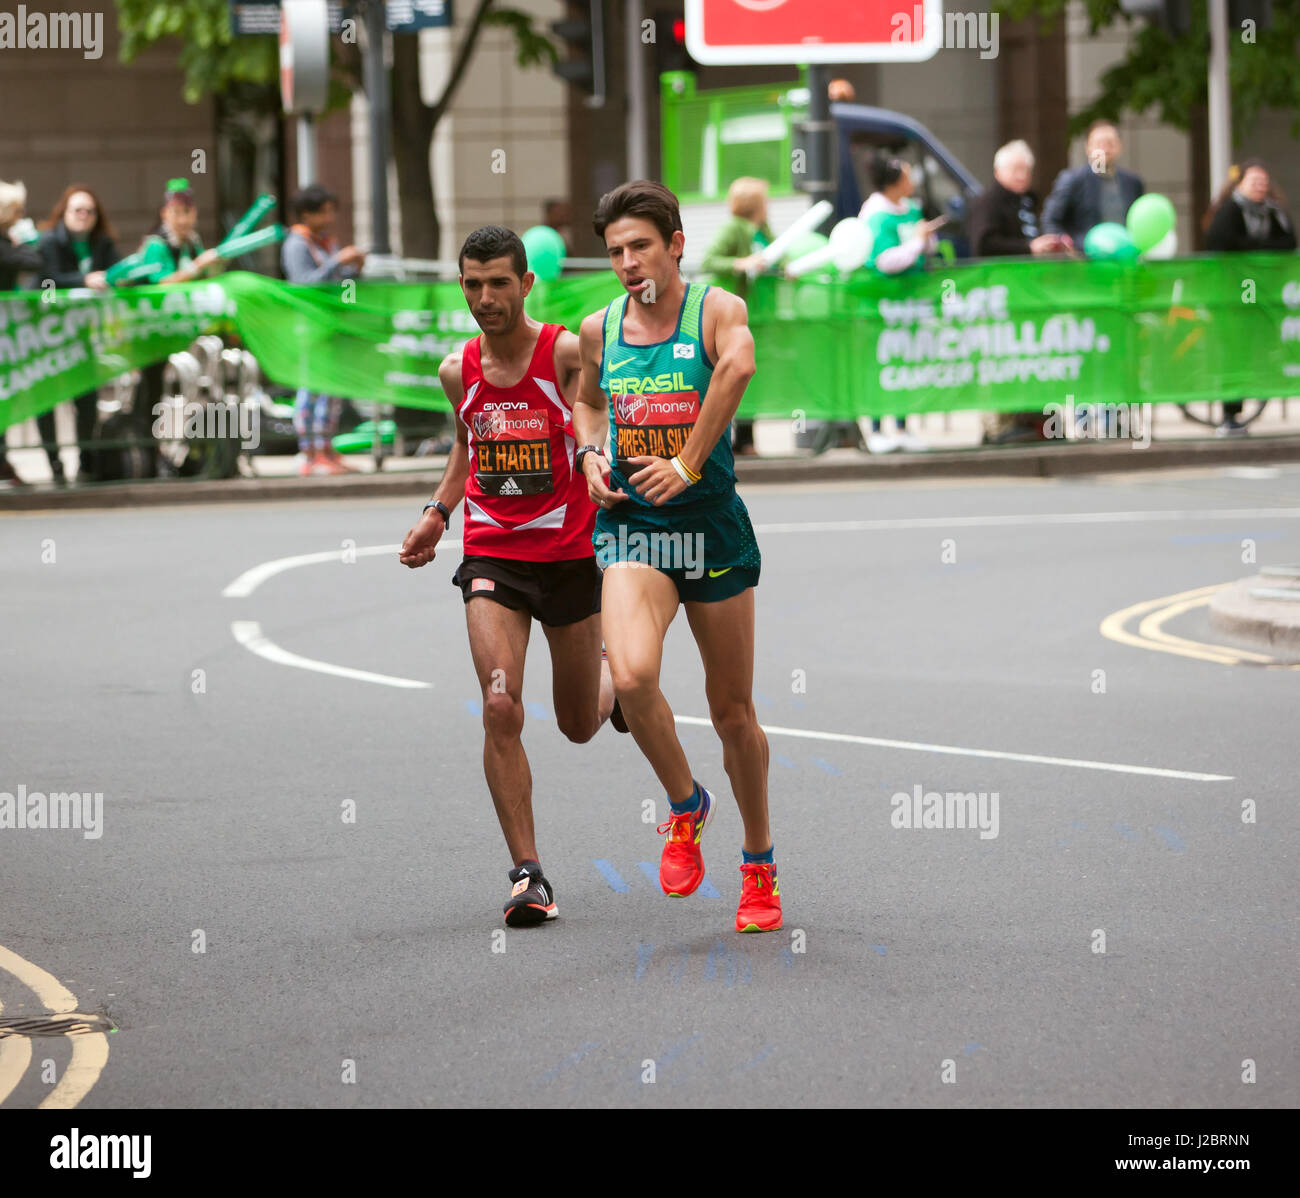 Alex Pires Da Silva and Abelhardi El Harti Competing in the World Para Athletic World Cup, part of the 2017 London Marathon Stock Photo